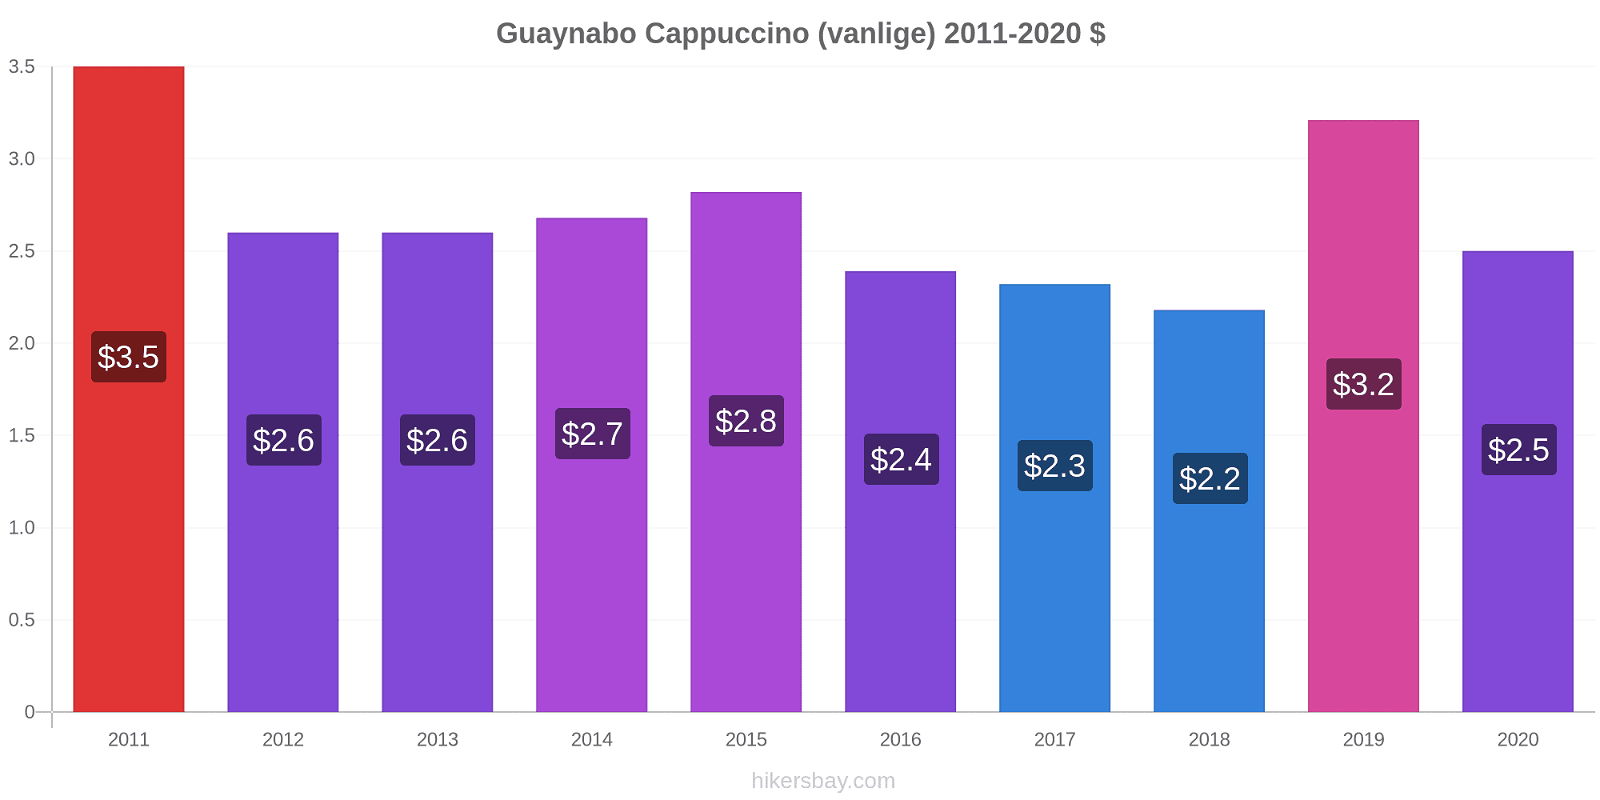 Guaynabo prisendringer Cappuccino (vanlige) hikersbay.com